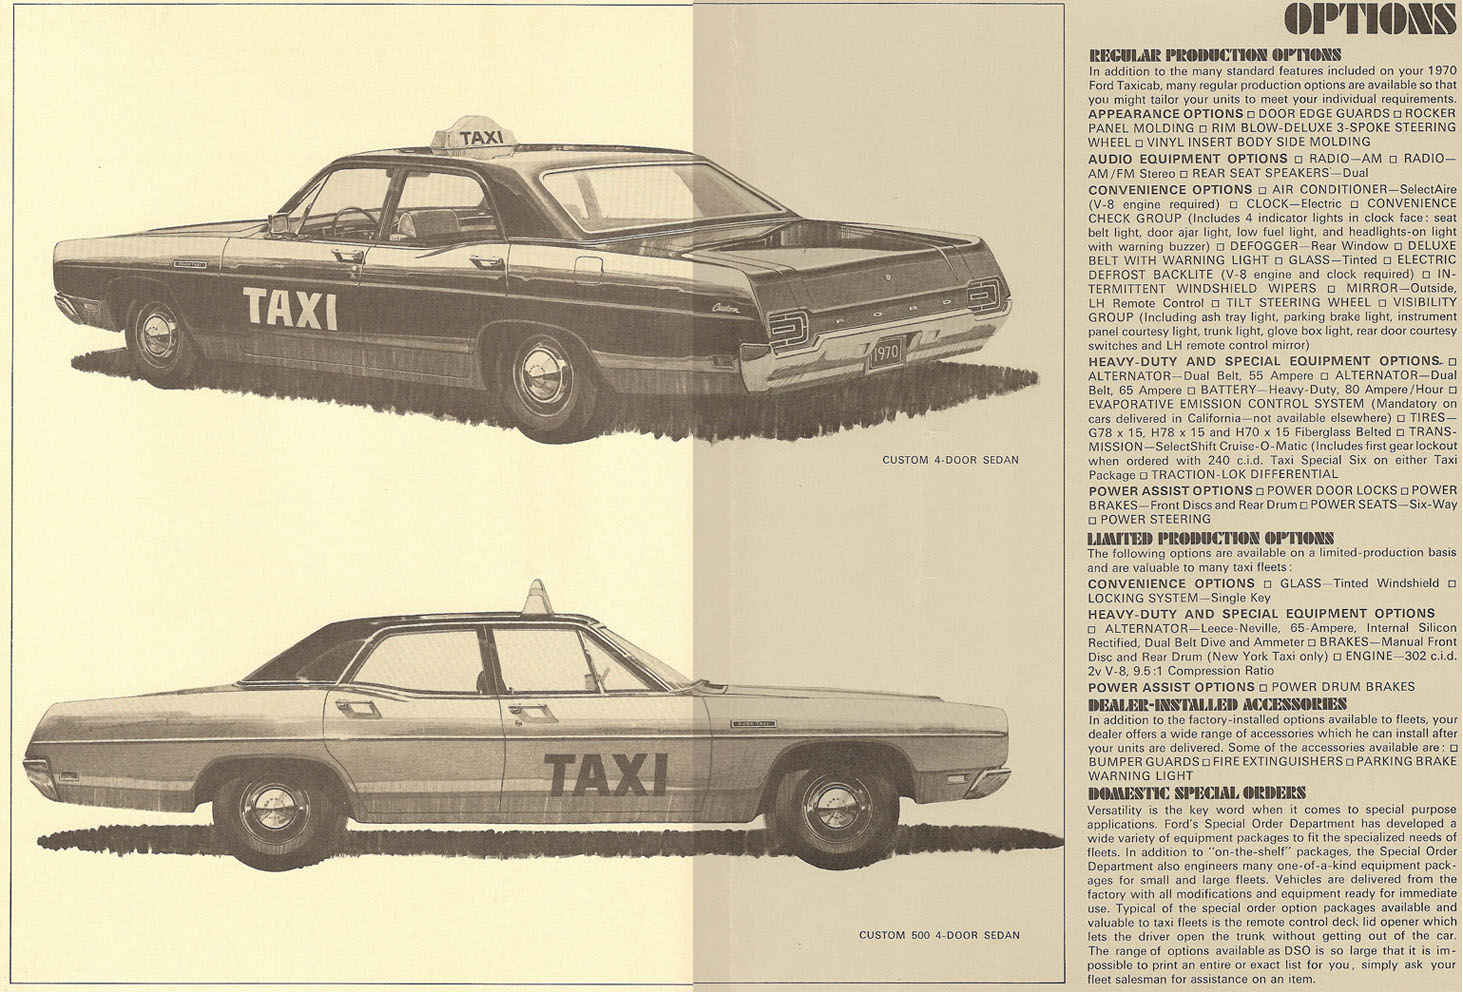 n_1970 Ford Taxicabs-04-05.jpg